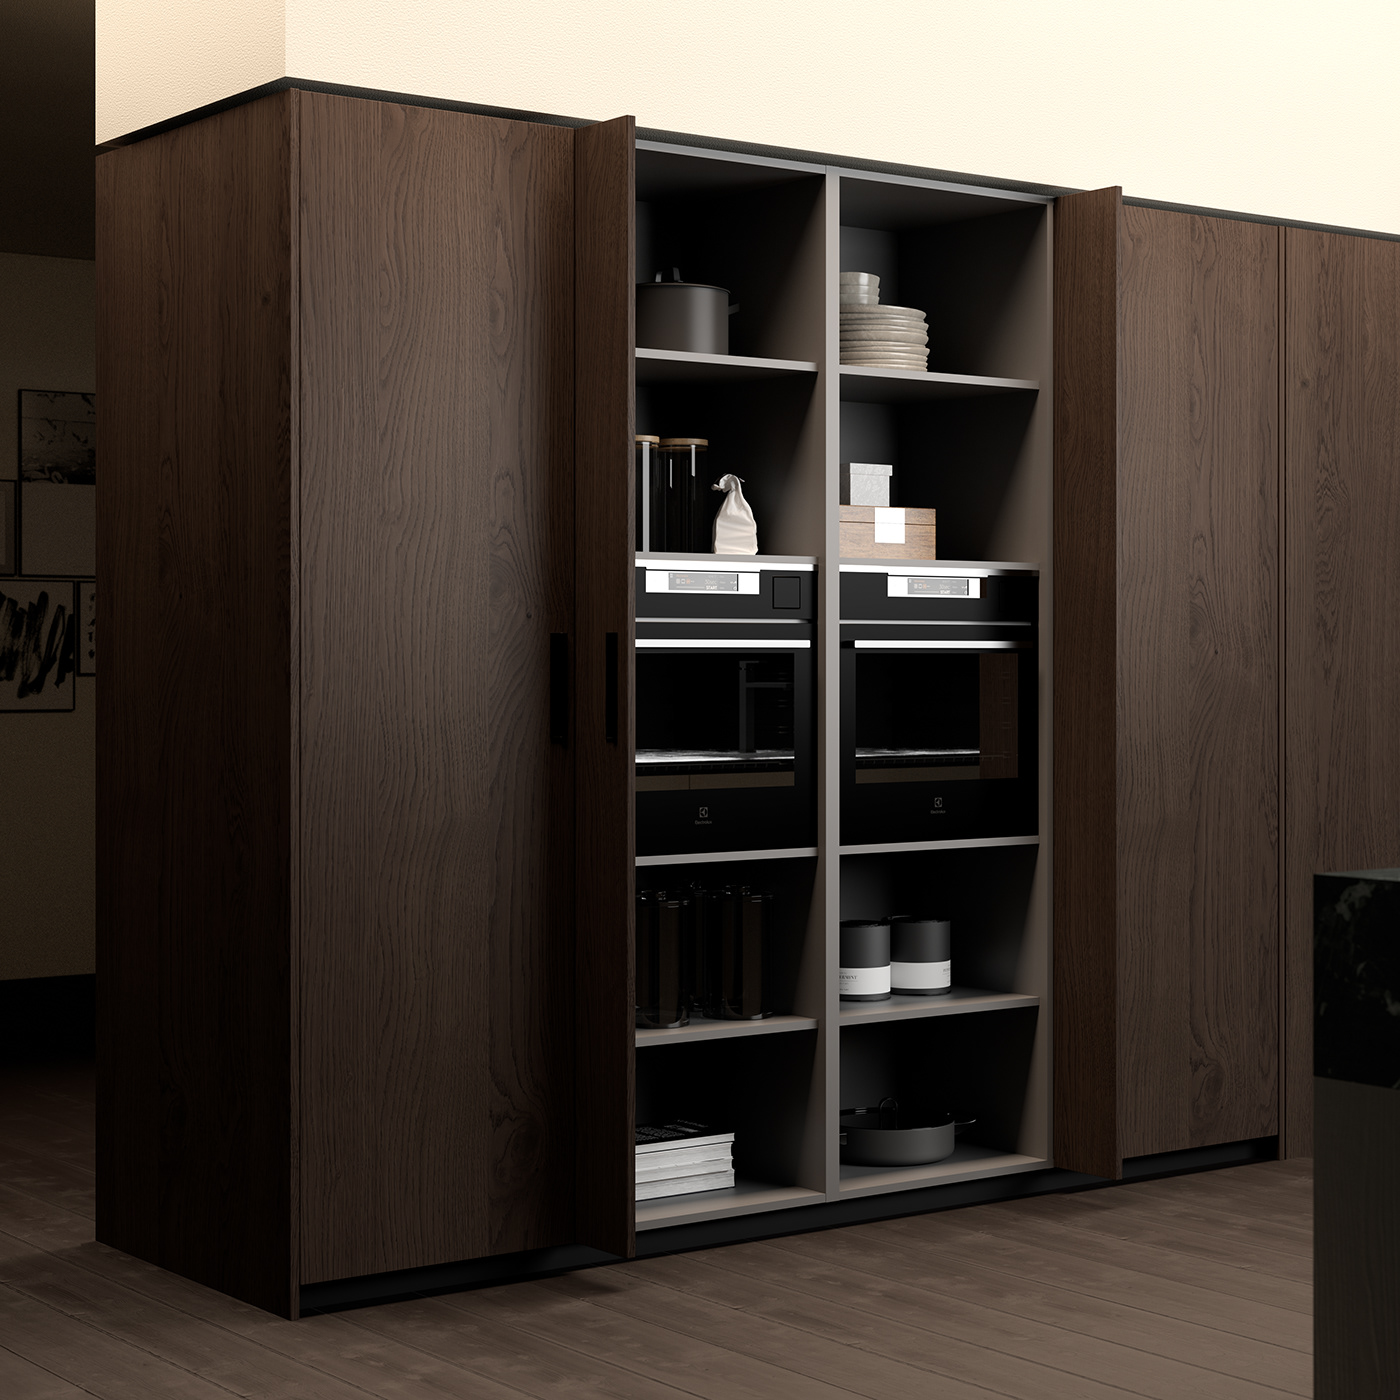 3D Behance design inspiration Interior kitchen maverickrender new 2020 rendering